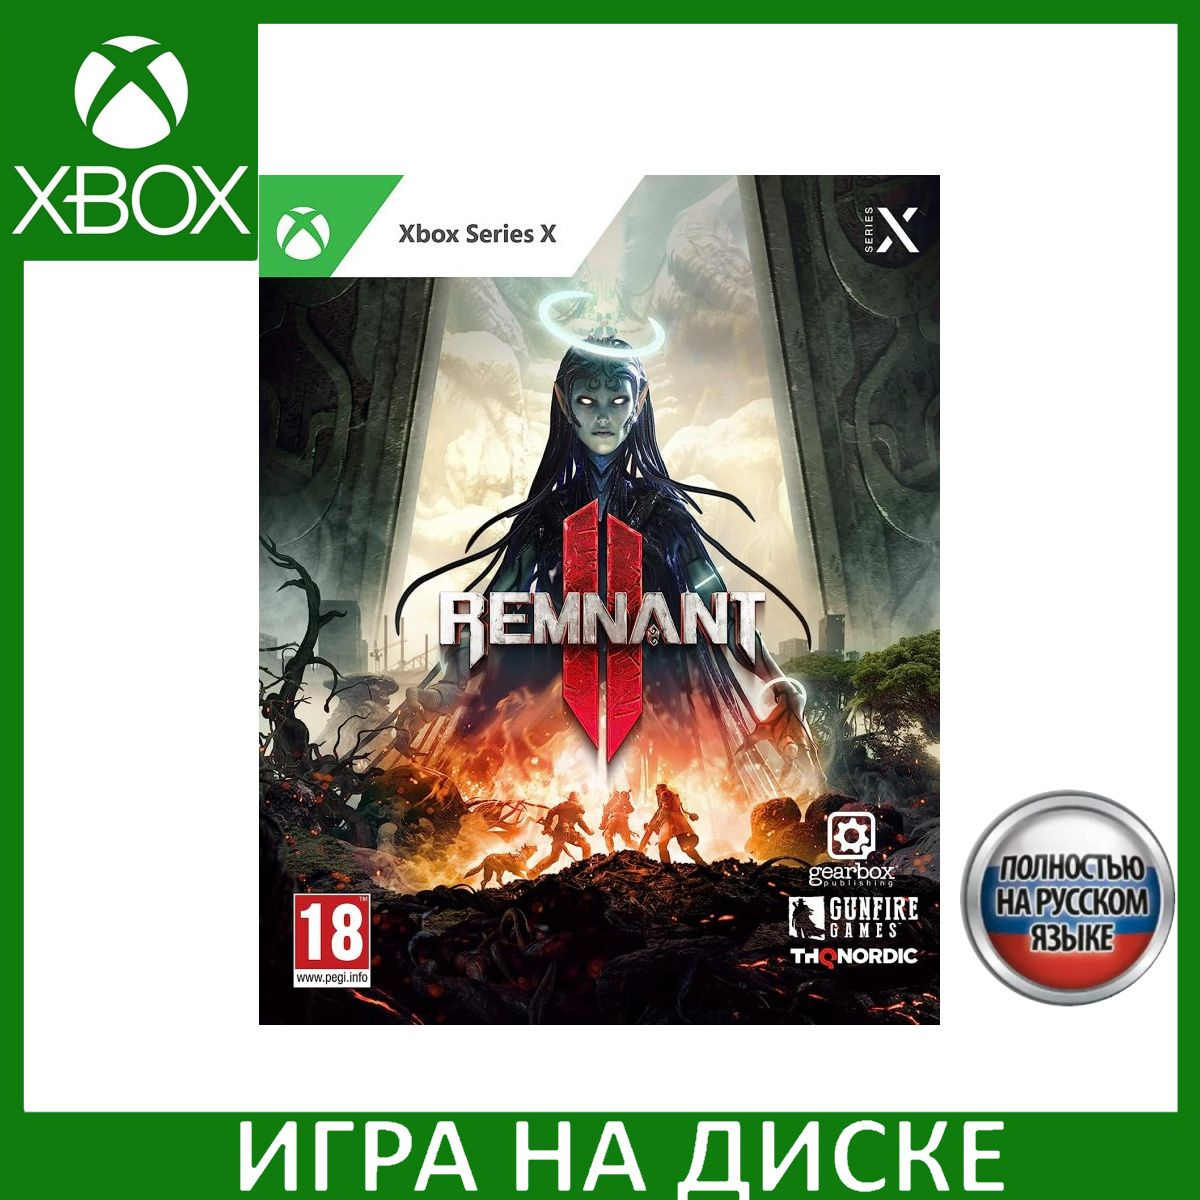 Игра на Диске Remnant II (2) Русская Версия (Xbox Series X)